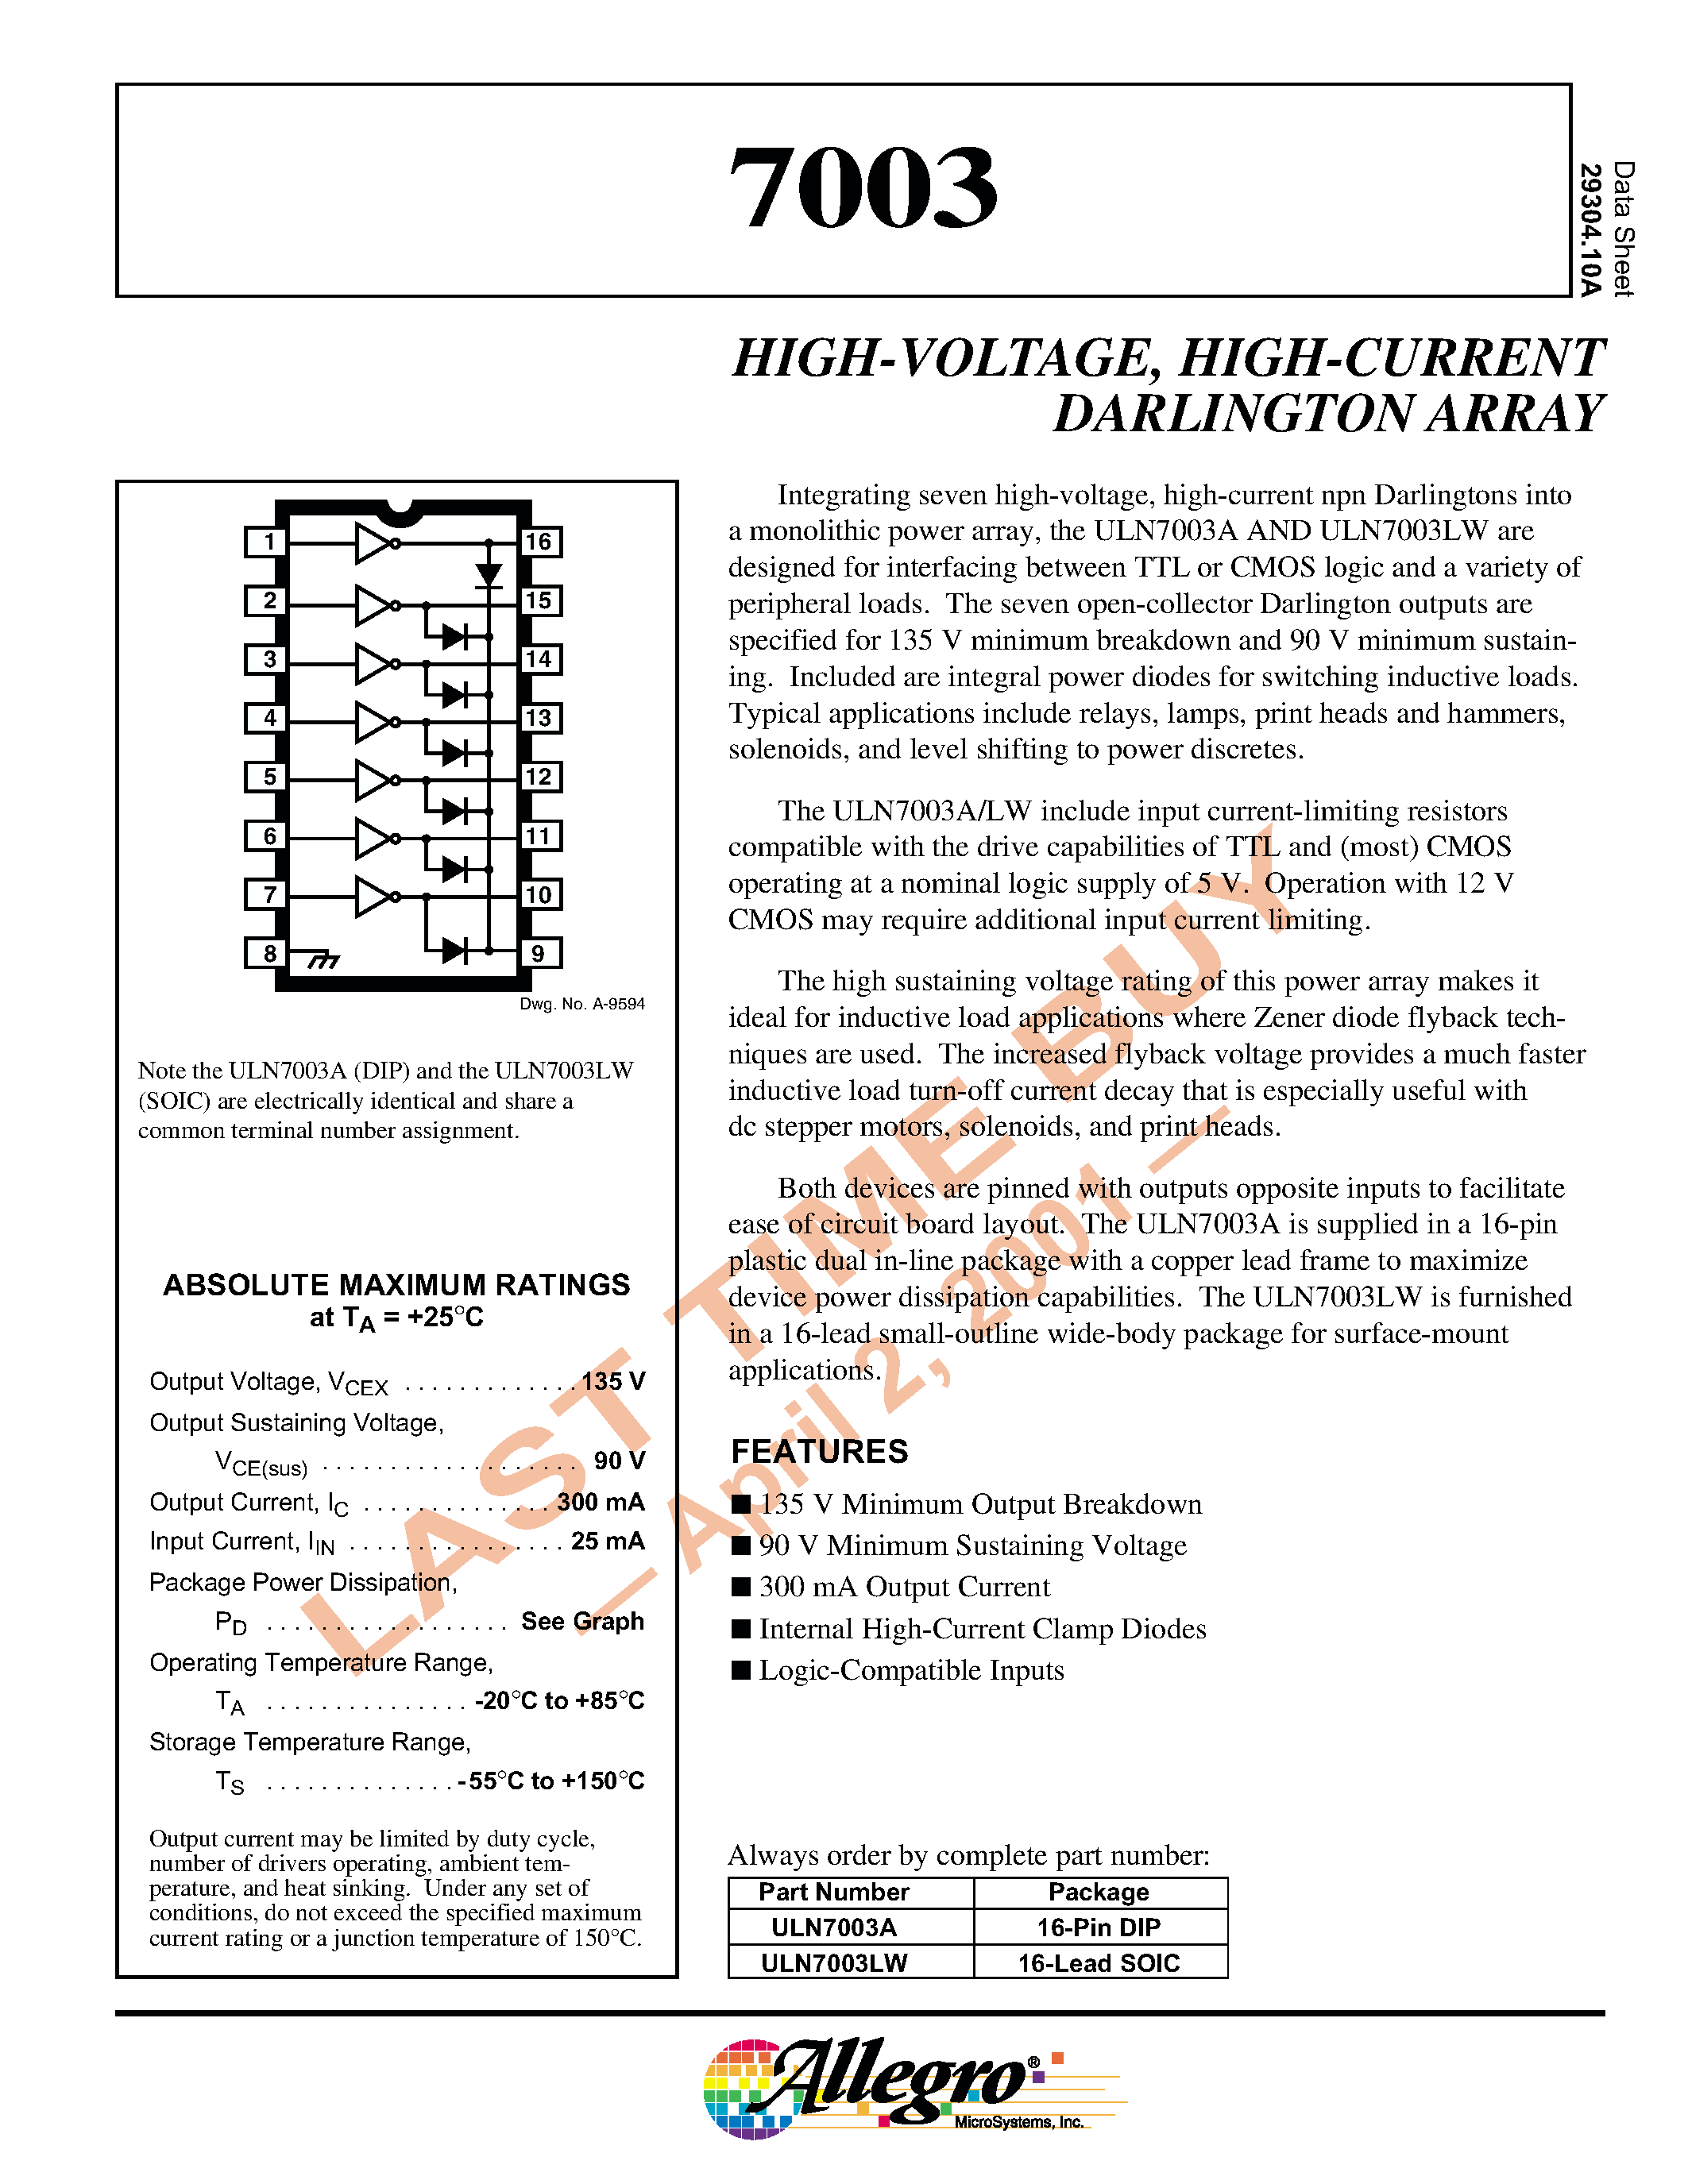 Datasheet ULN7003 - HIGH-VOLTAGE/ HIGH-CURRENT DARLINGTON ARRAY page 1